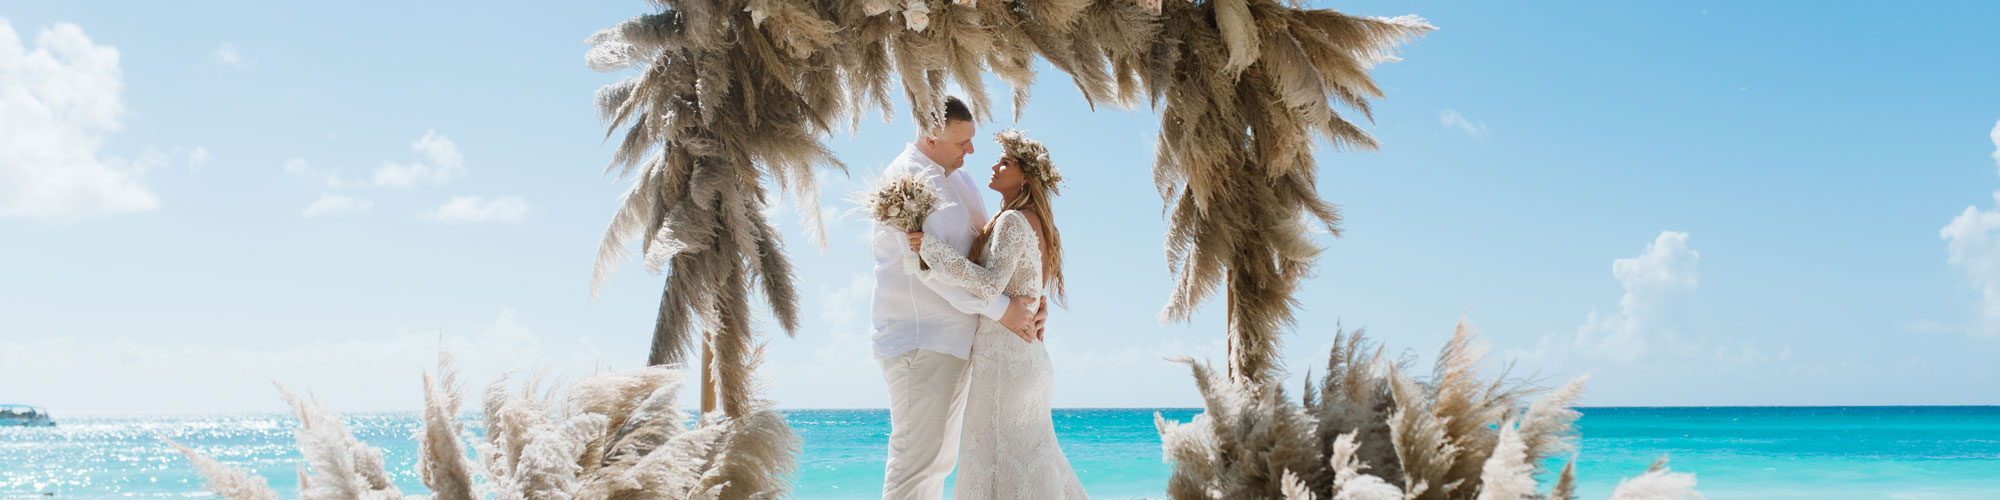 Ślub-na-Dominikanie-baner1